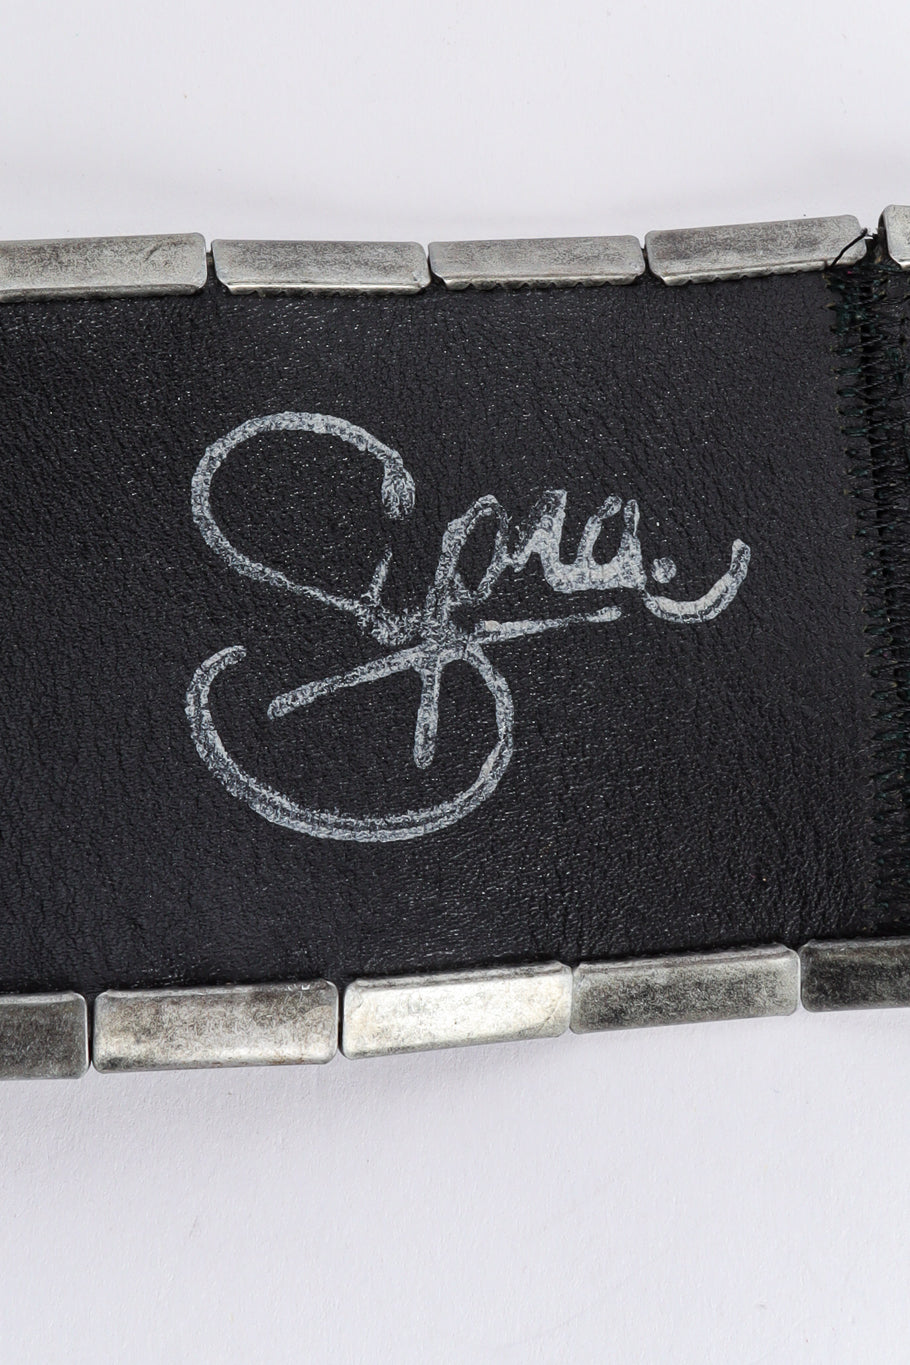 distressed leather wrap belt by Spira signature @recessla